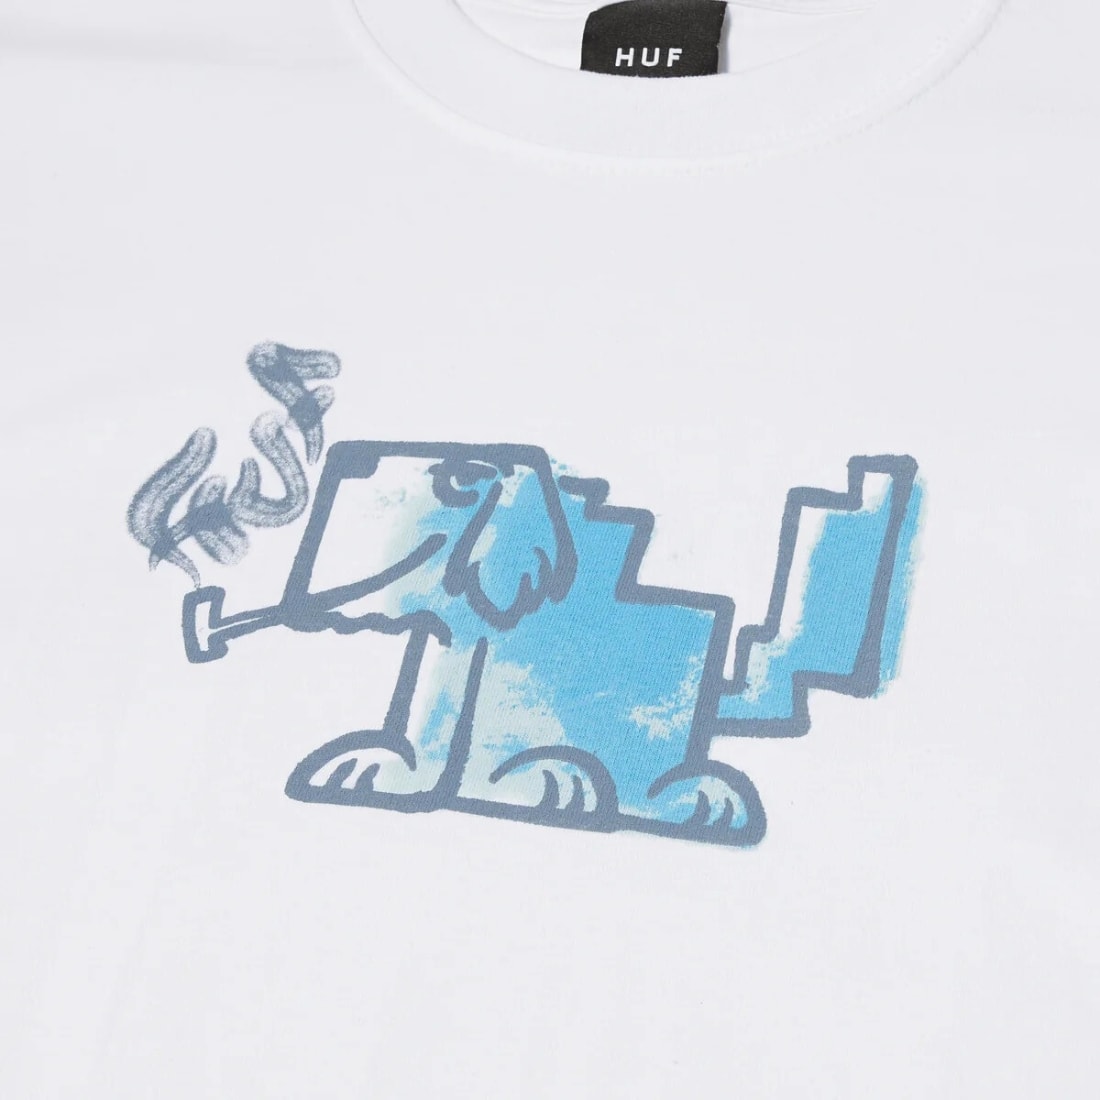 Huf Mod Dog T-Shirt - White - Mens Graphic T-Shirt by Huf